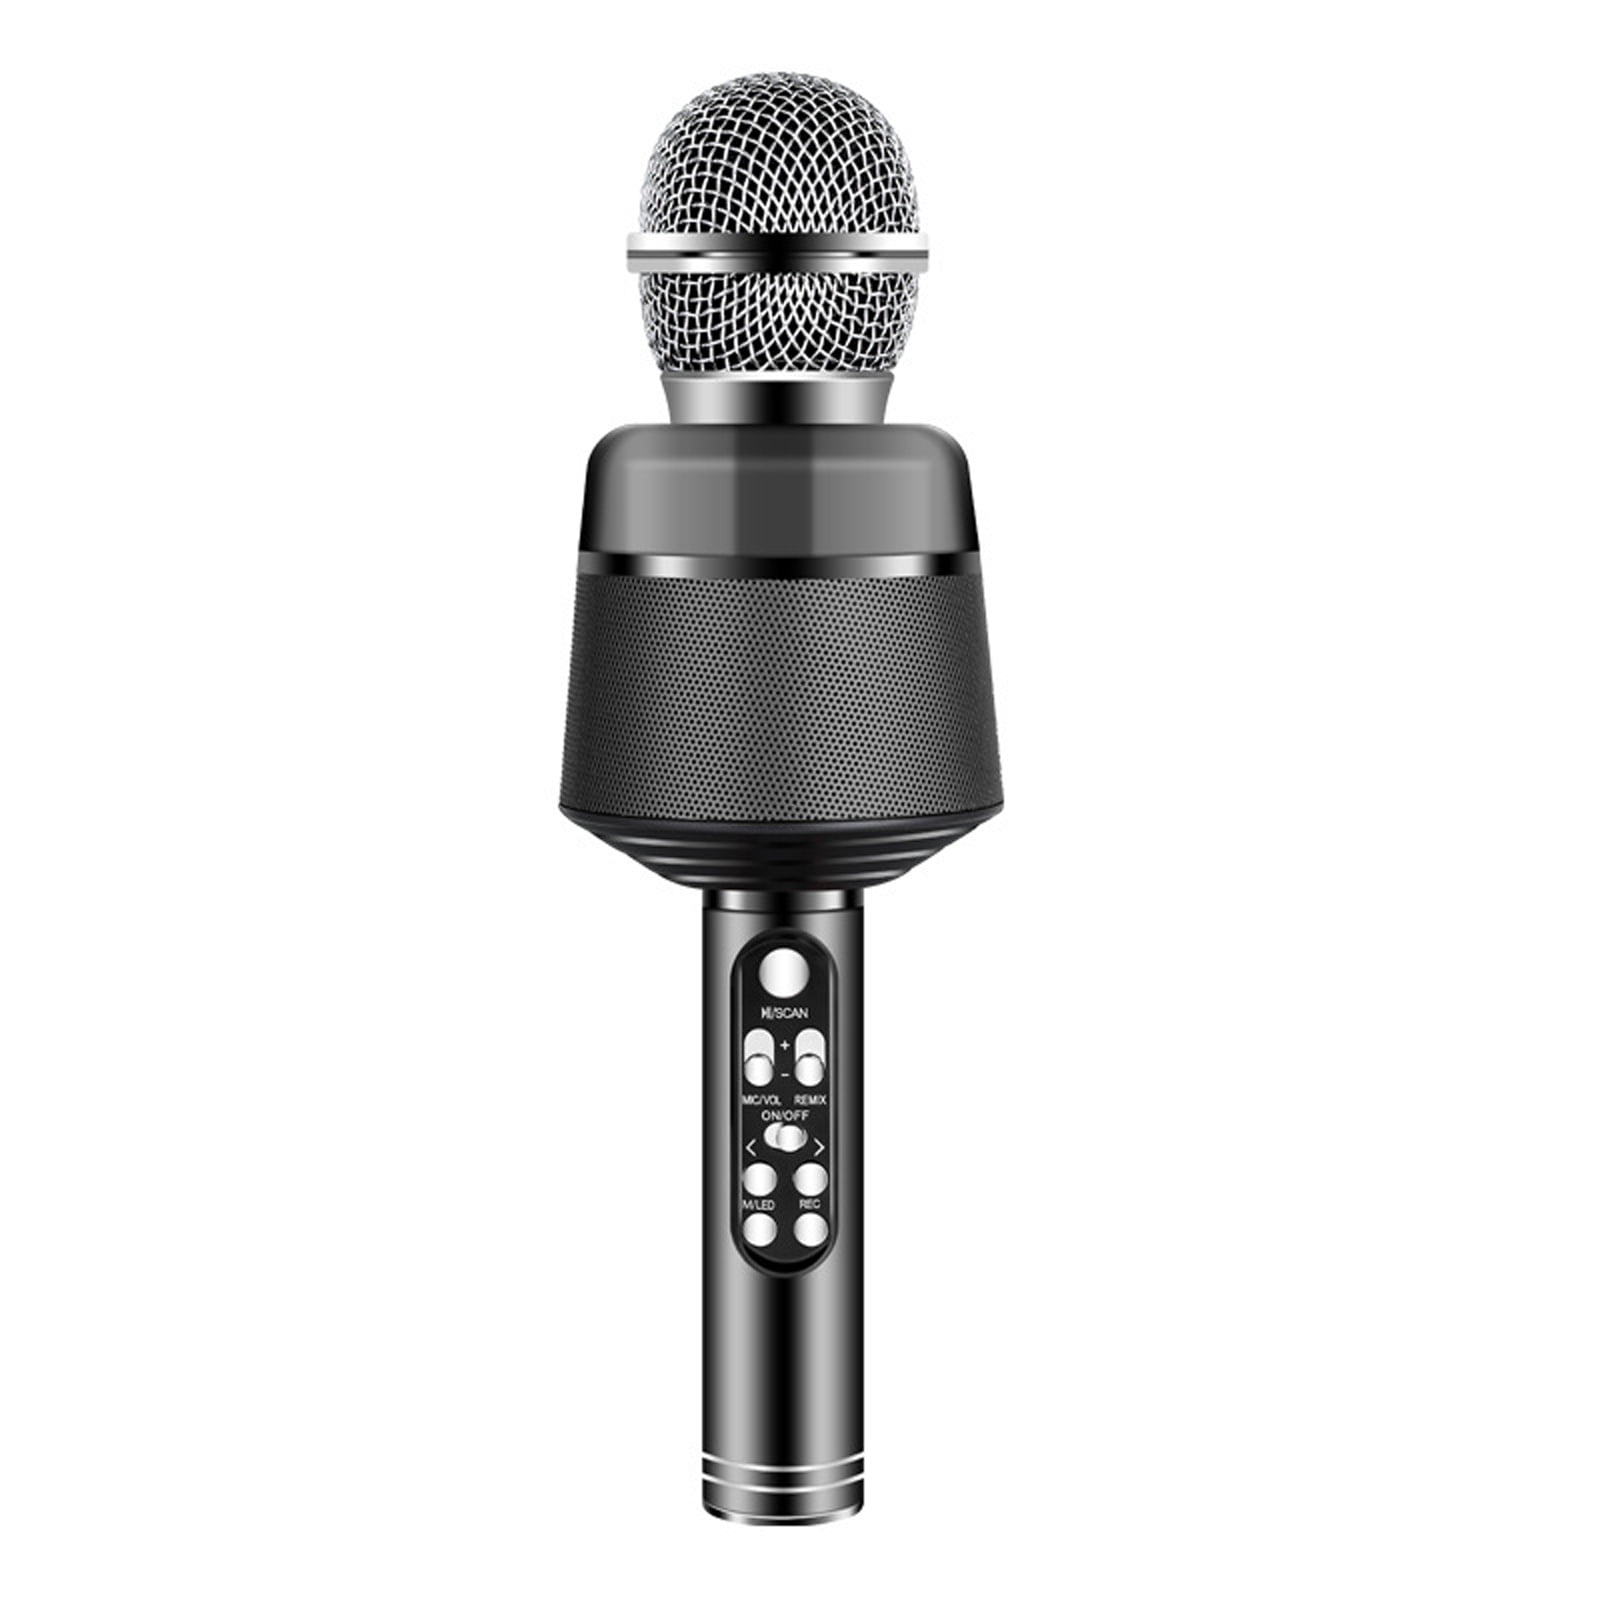 LITTLEFUN Microphone for Girl Kid Karaoke Machine for Girls Gift Age 4-12 Toy 